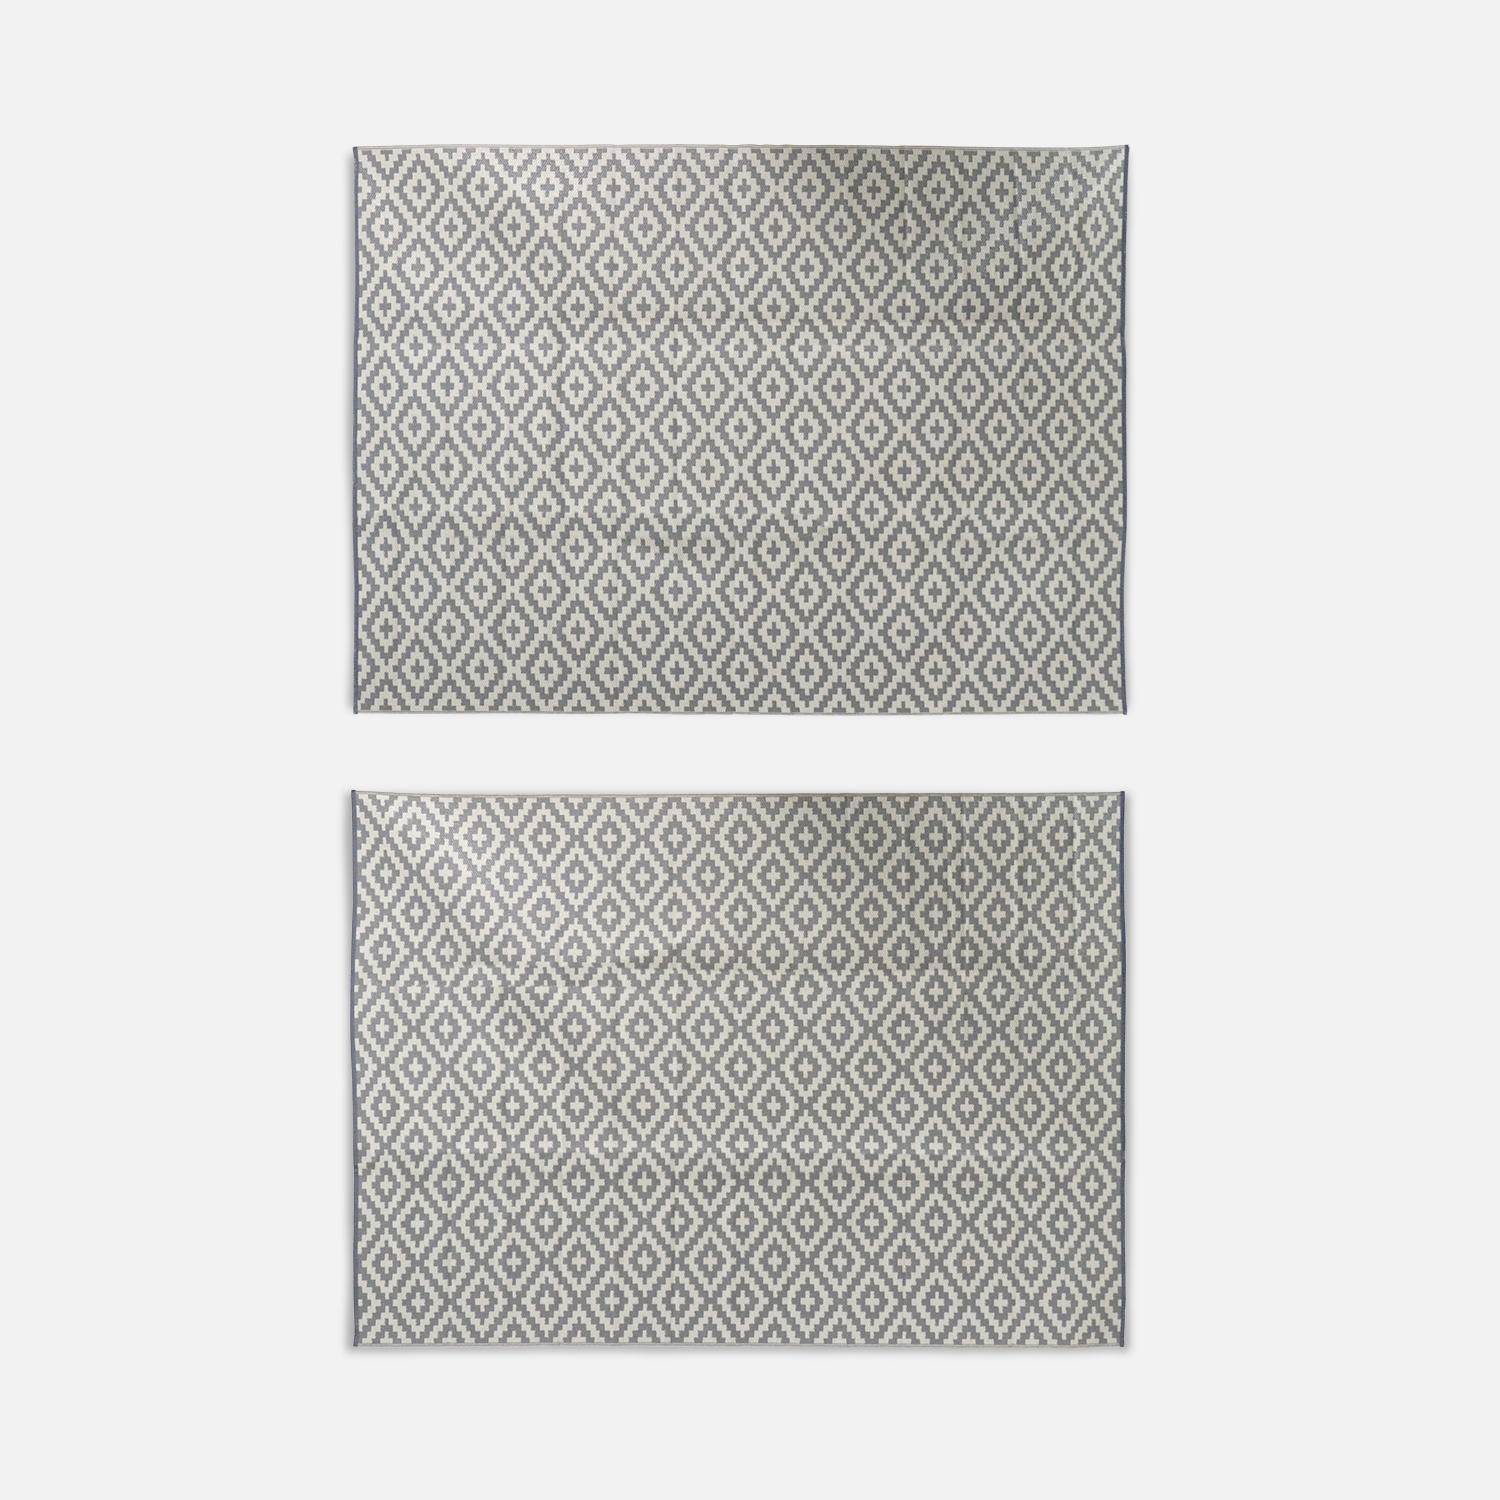 Tappeto per esterni 270x360cm STOCKHOLM - Rettangolare, motivo diamante kaki, jacquard, reversibile, interno/esterno,,sweeek,Photo2